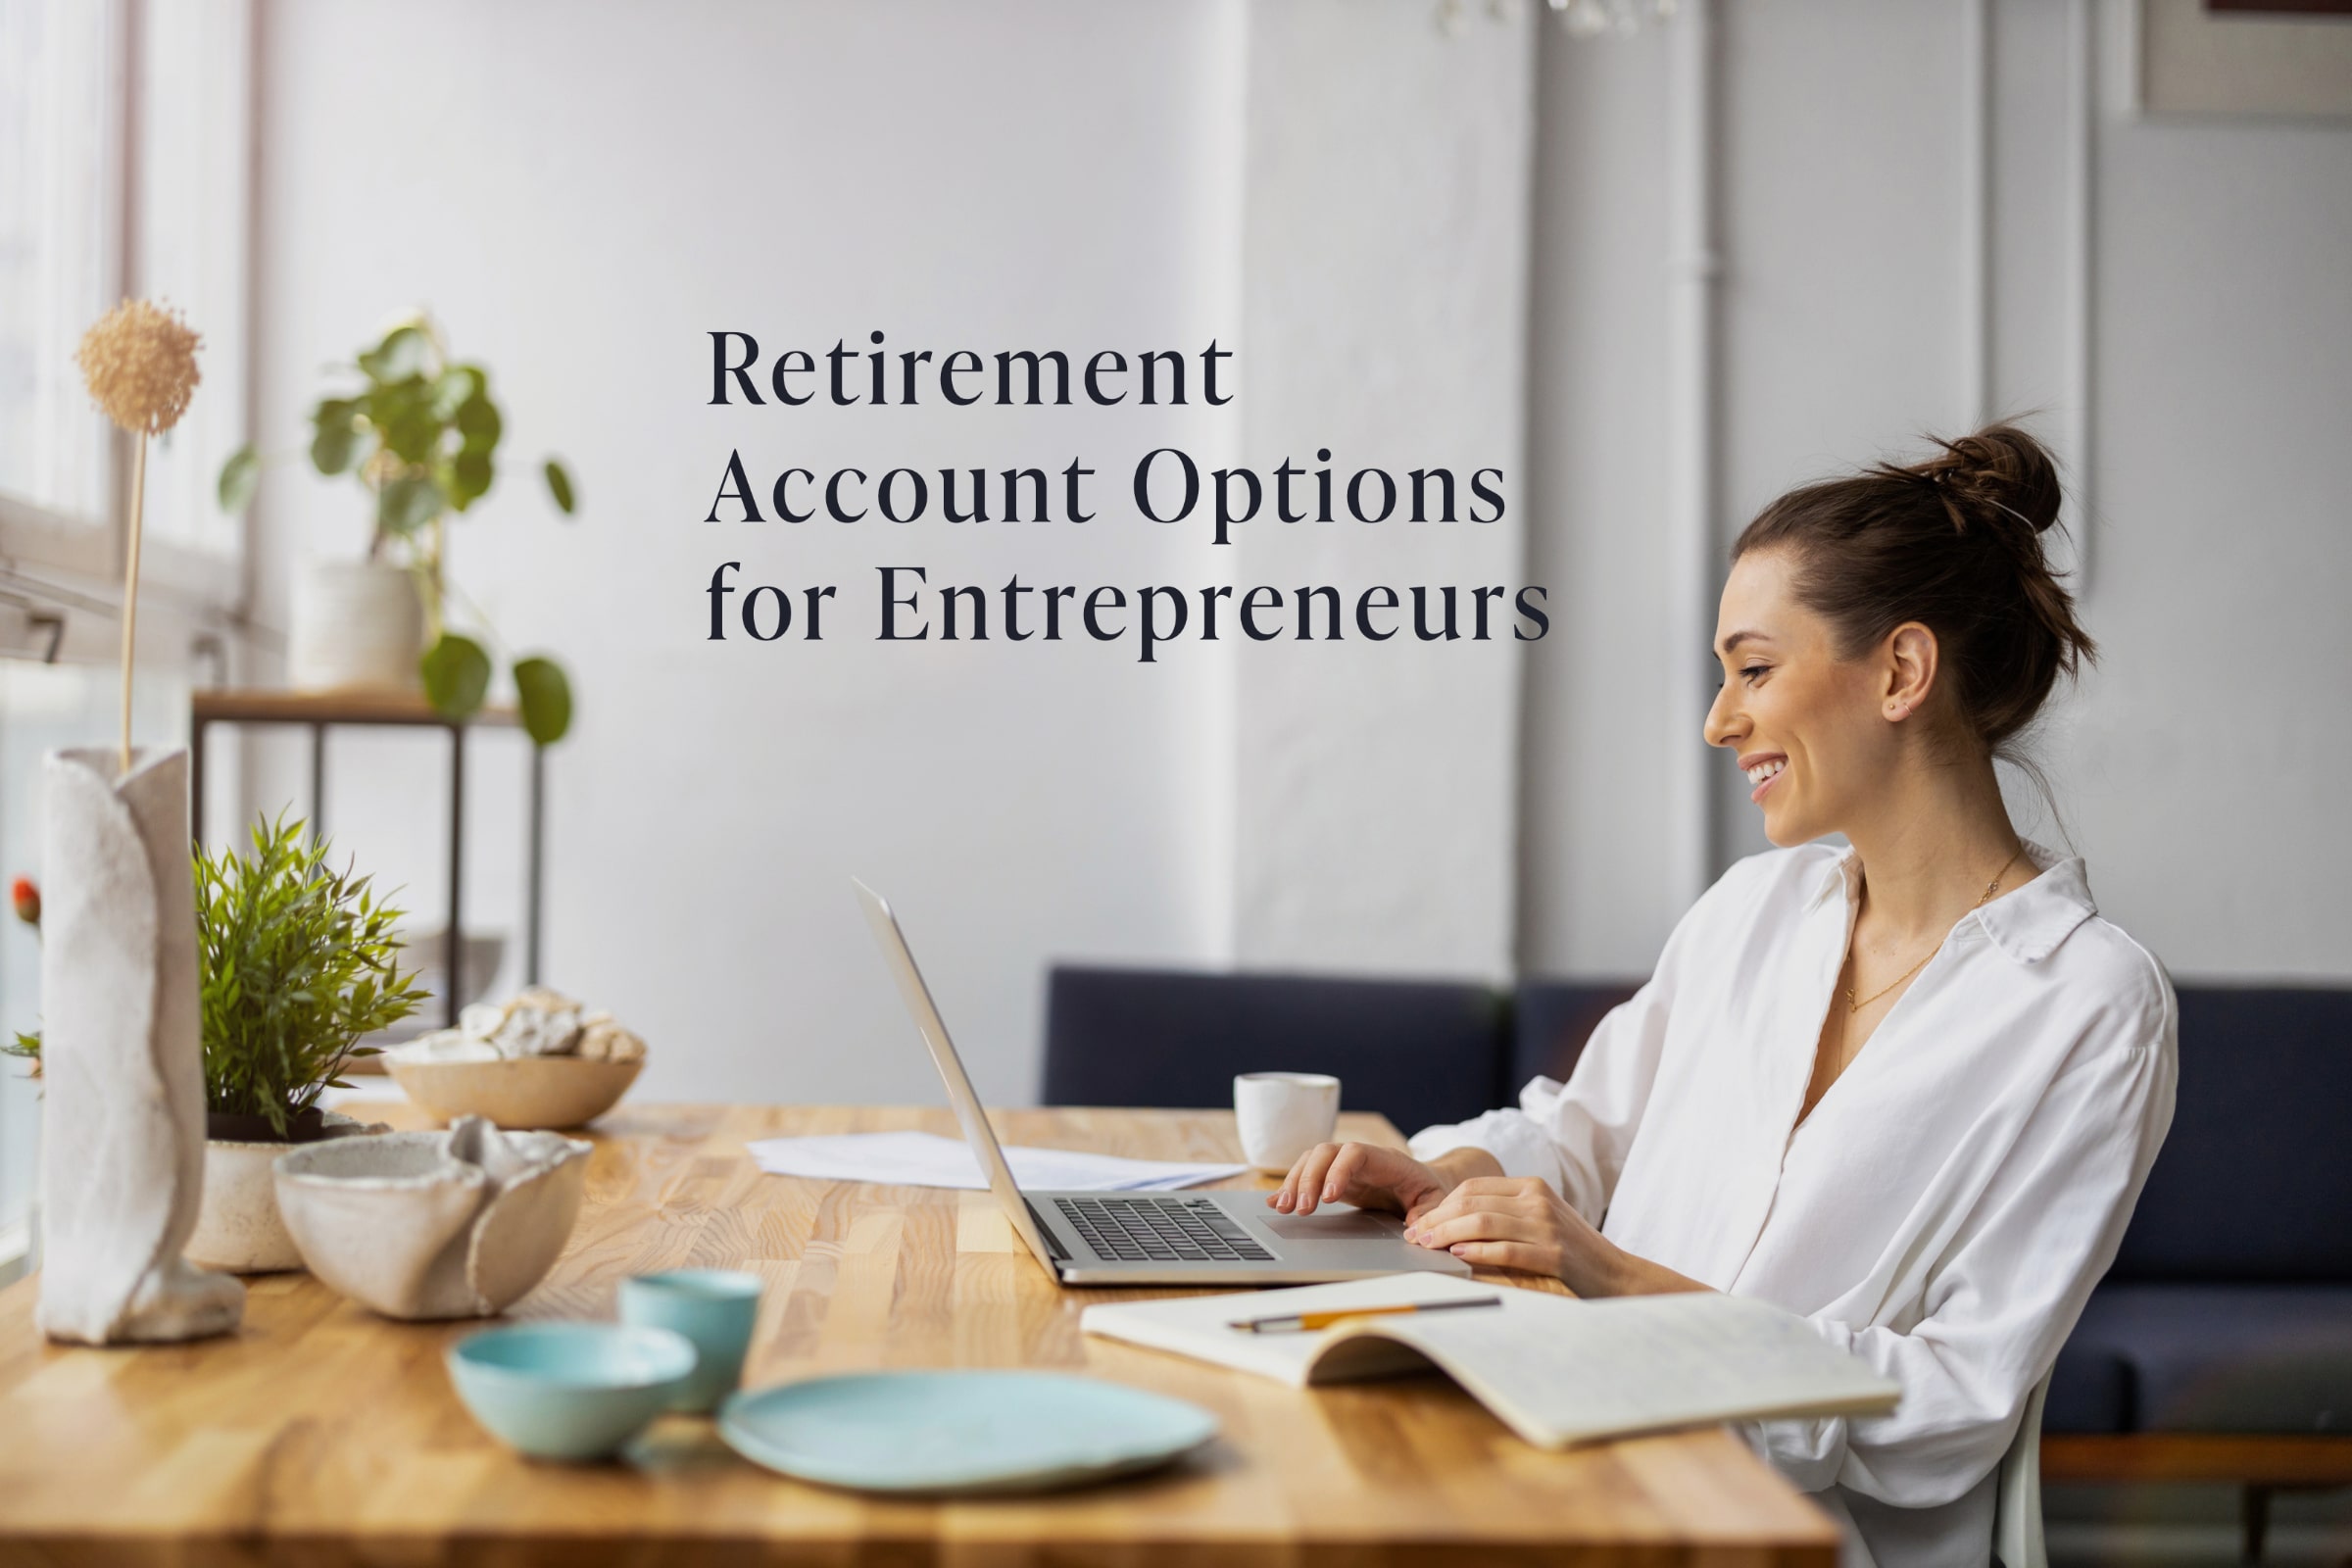 03-2023-EG-A3-F03-Retirement-Account-Options-for-Entrepreneurs-1-min